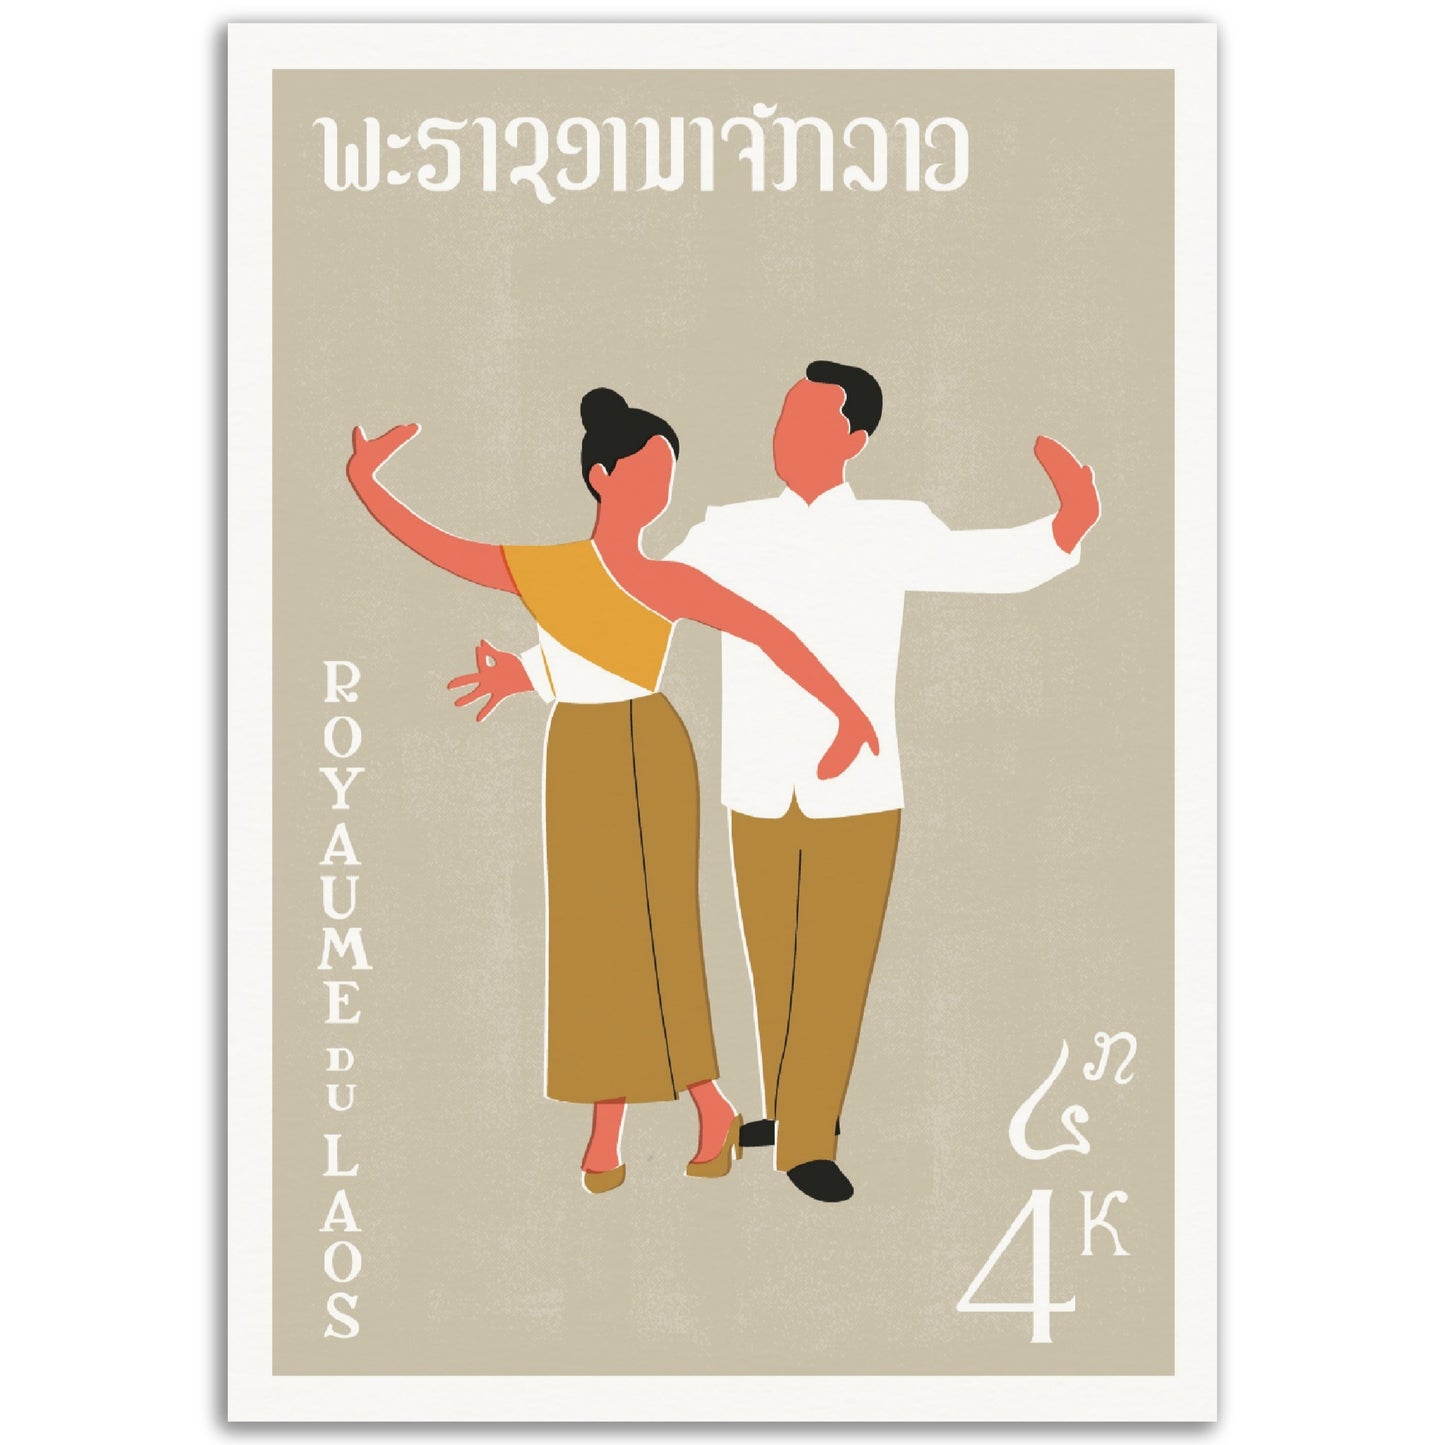 Lum Vong on Matte Paper Poster